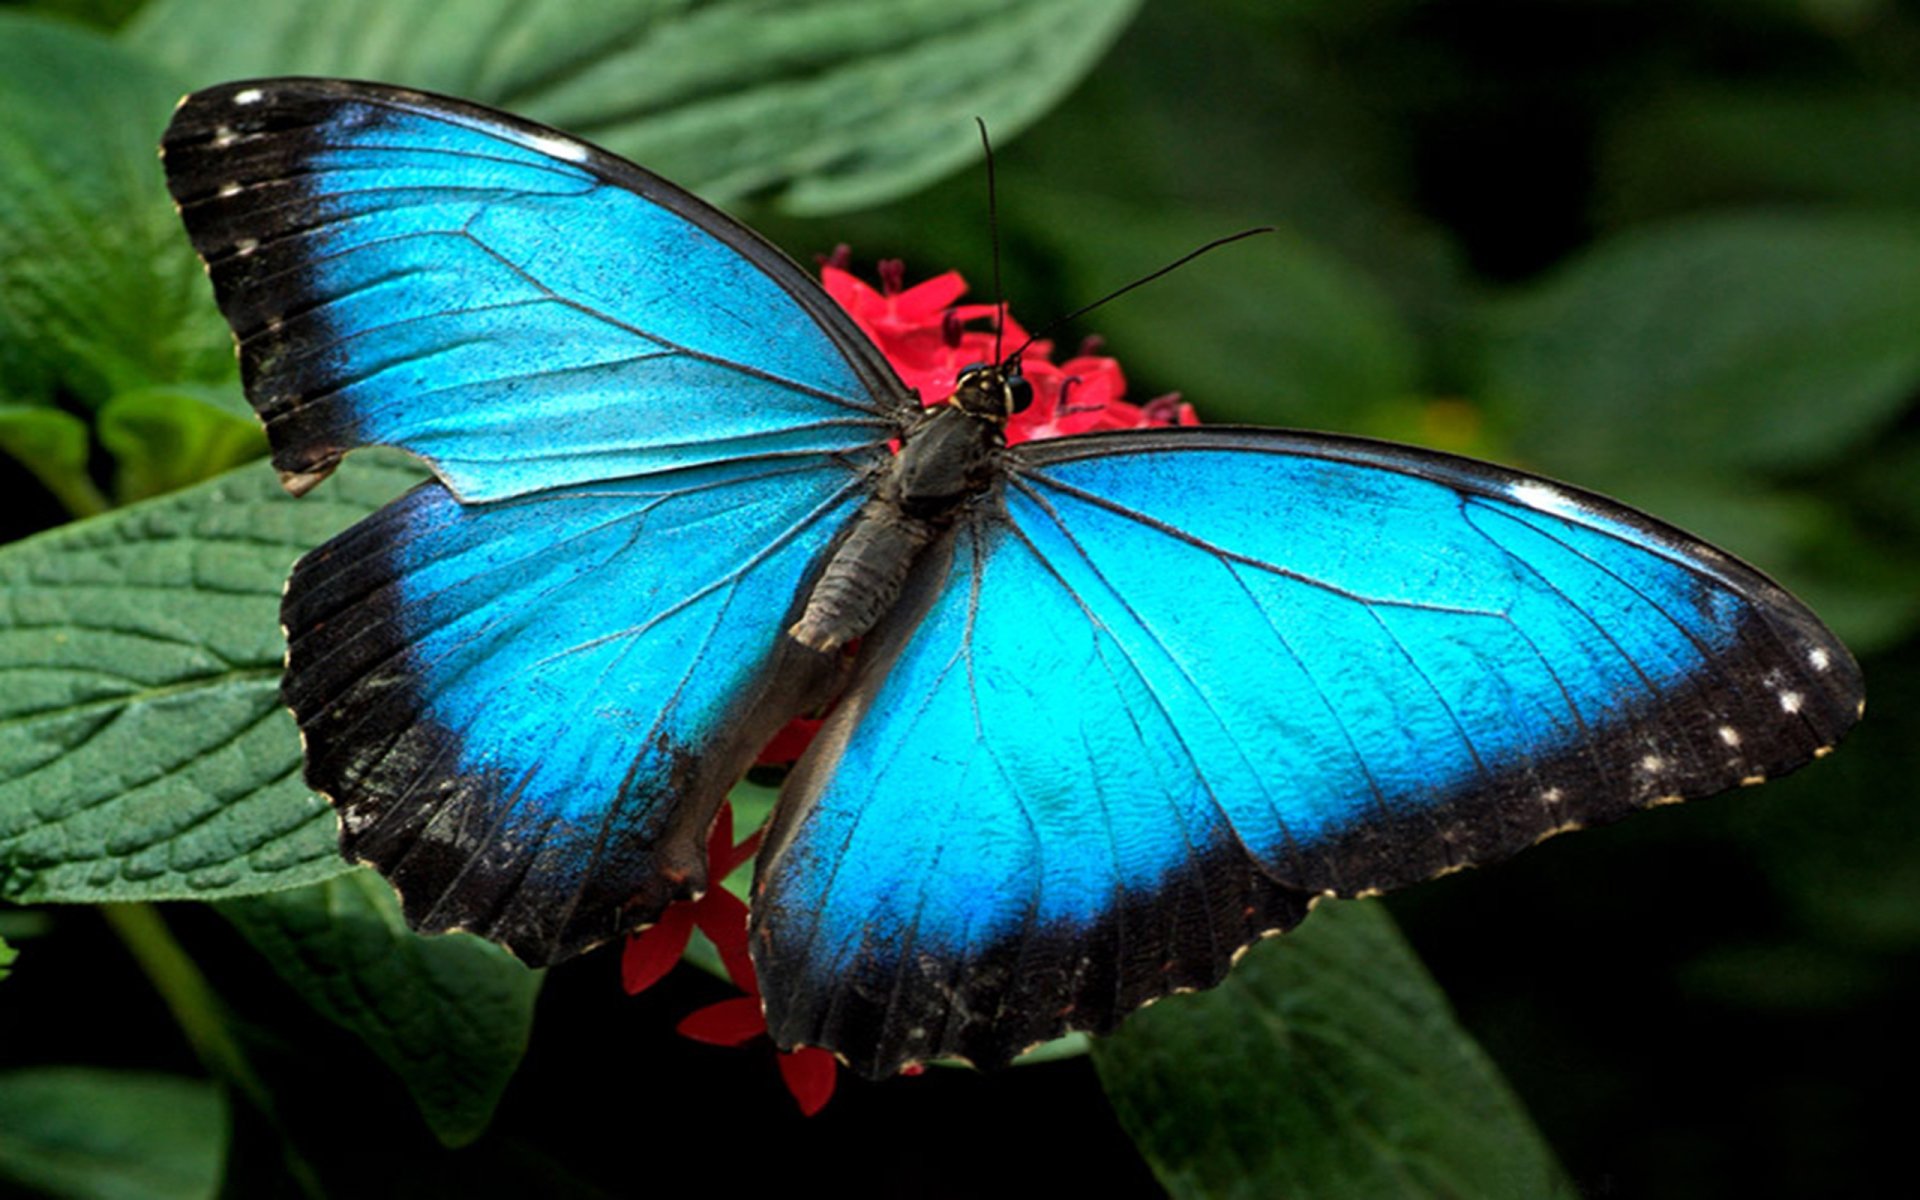 wallpapers de mariposas,moths and butterflies,butterfly,insect,invertebrate,blue